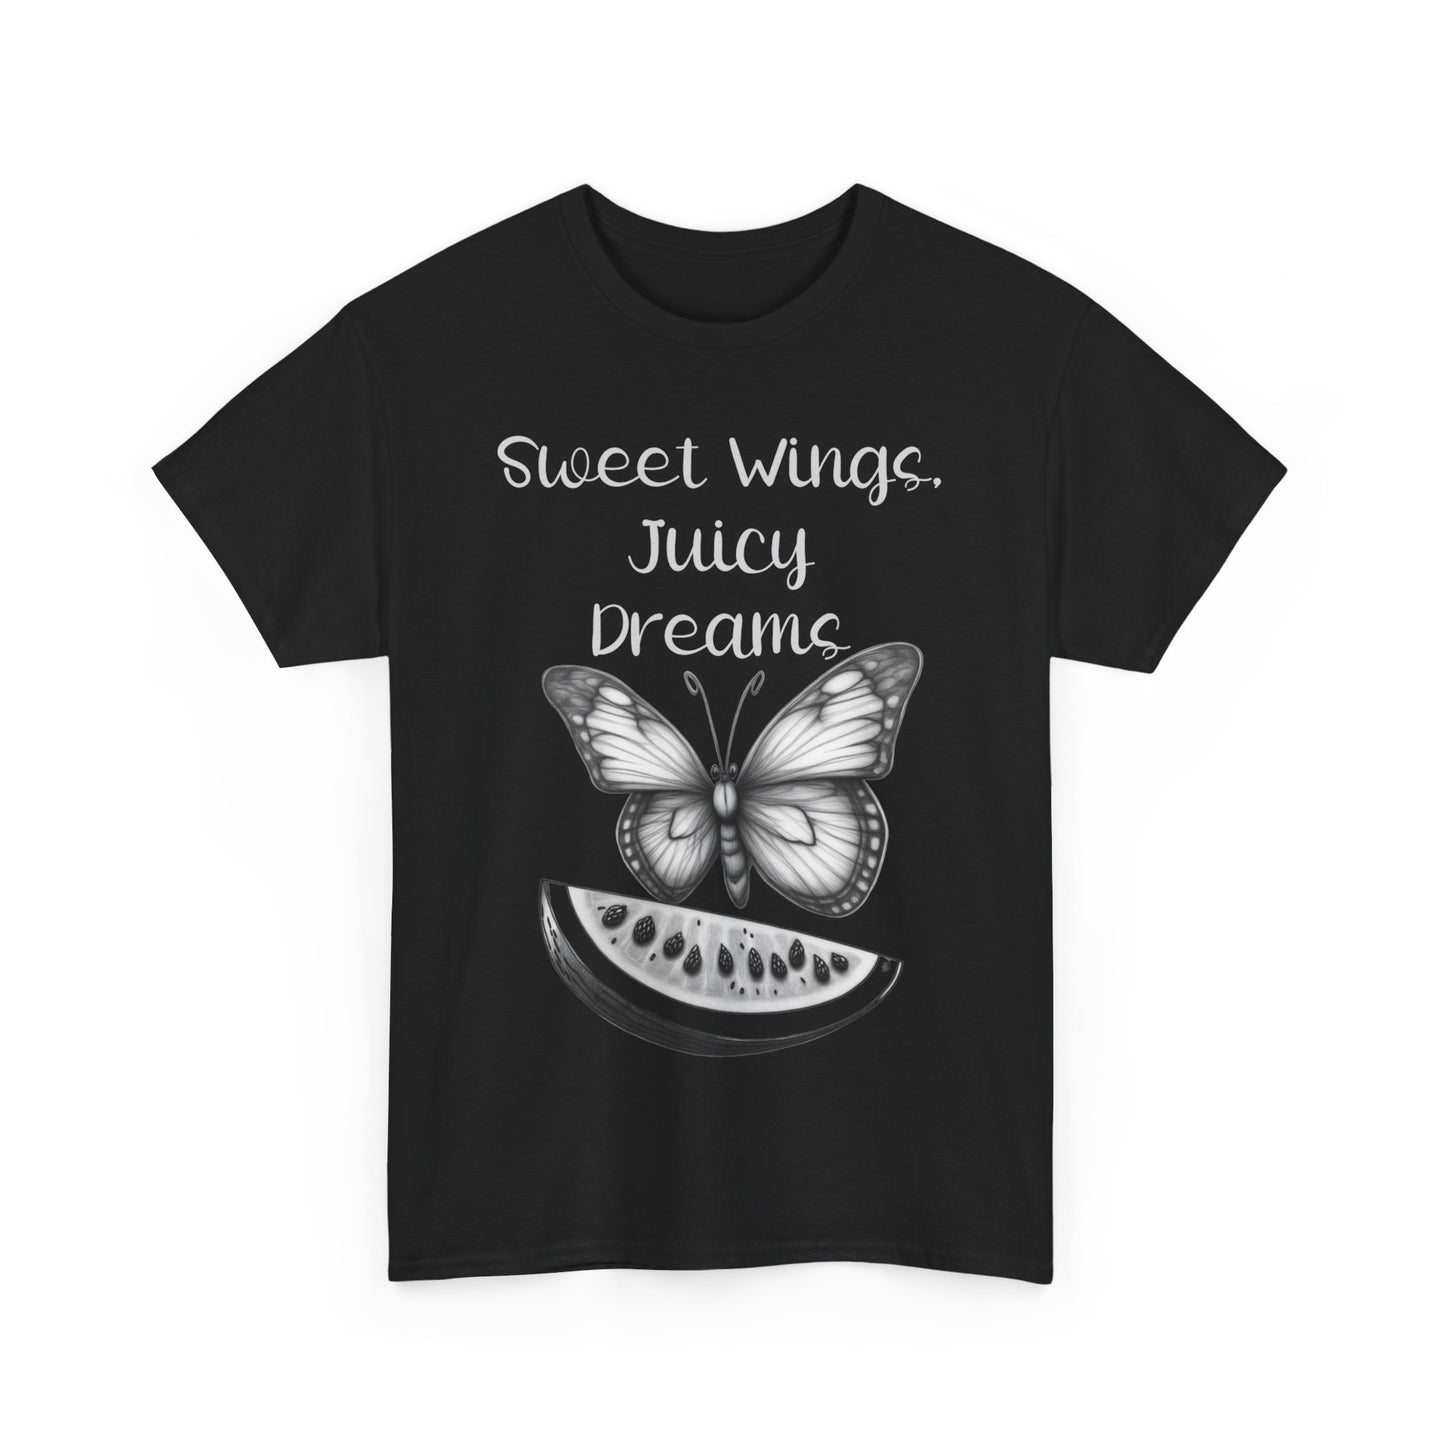 Vintage Watermelon Butterfly T-Shirt - "Sweet Wings, Juicy Dreams" - Retro Graphic Tee